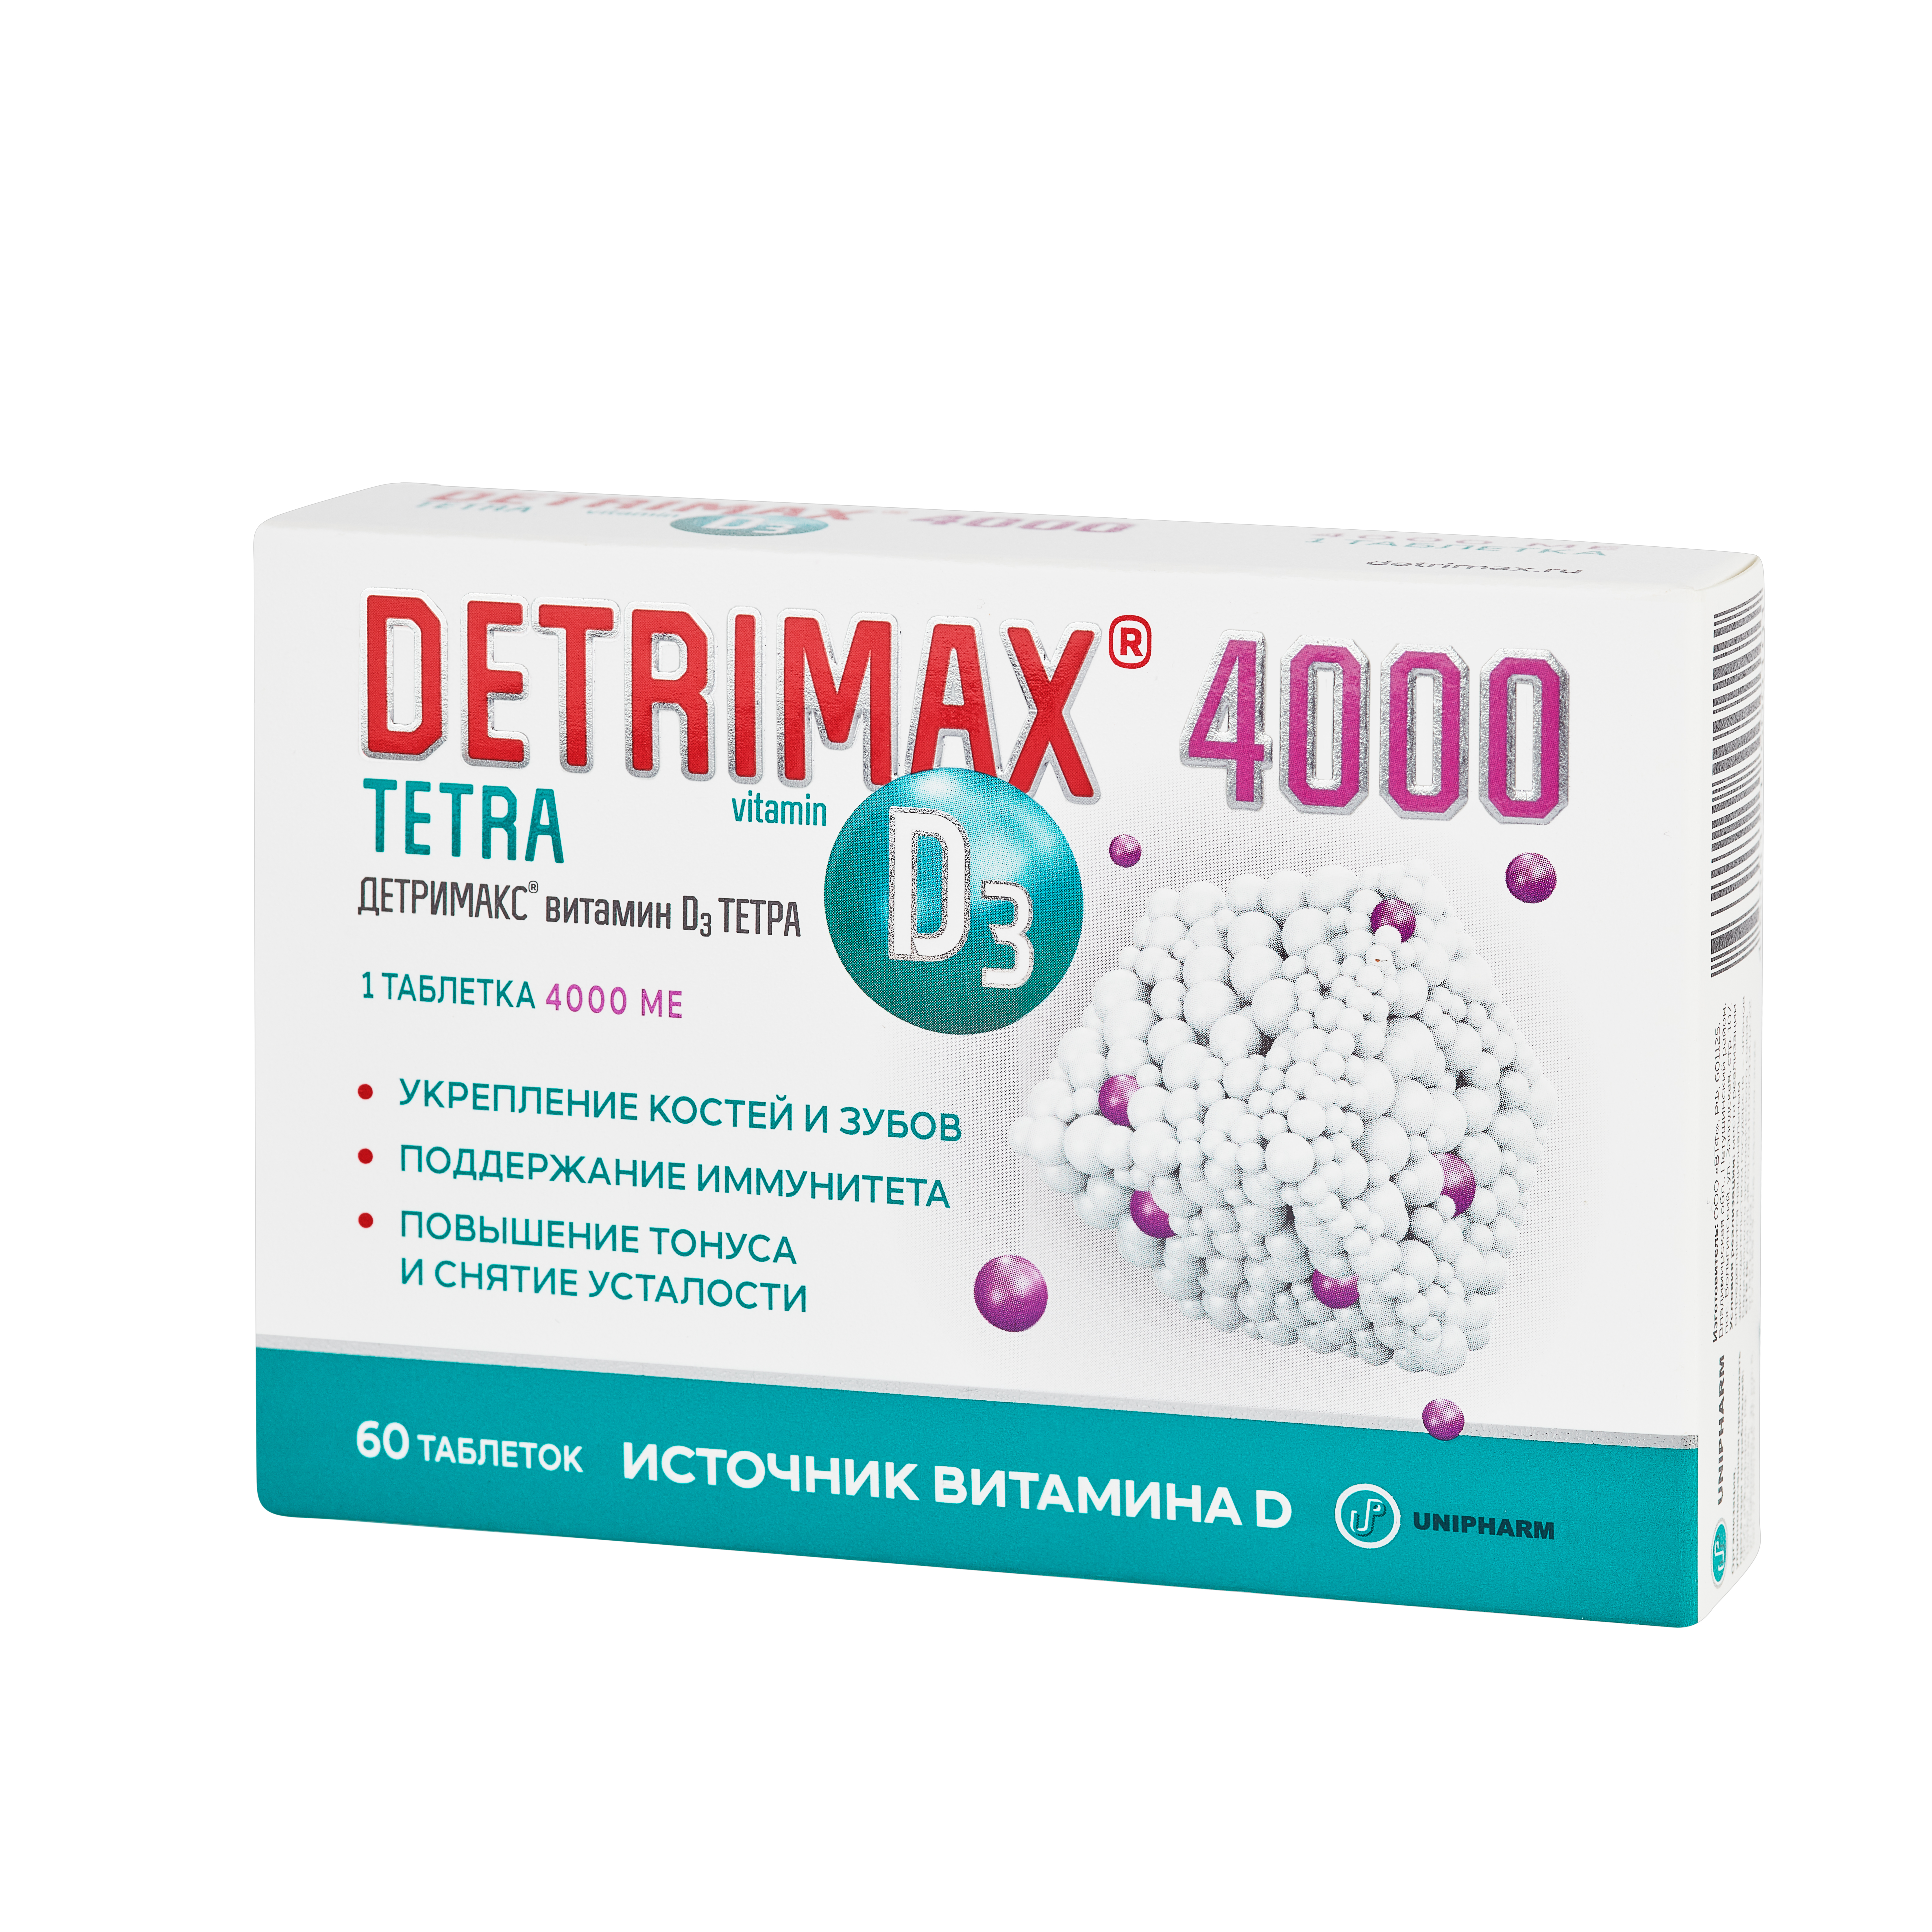 Витамин Д3 Детримакс Тетра 4000 МЕ в 1 таблетке 60 таблеток - фото 2